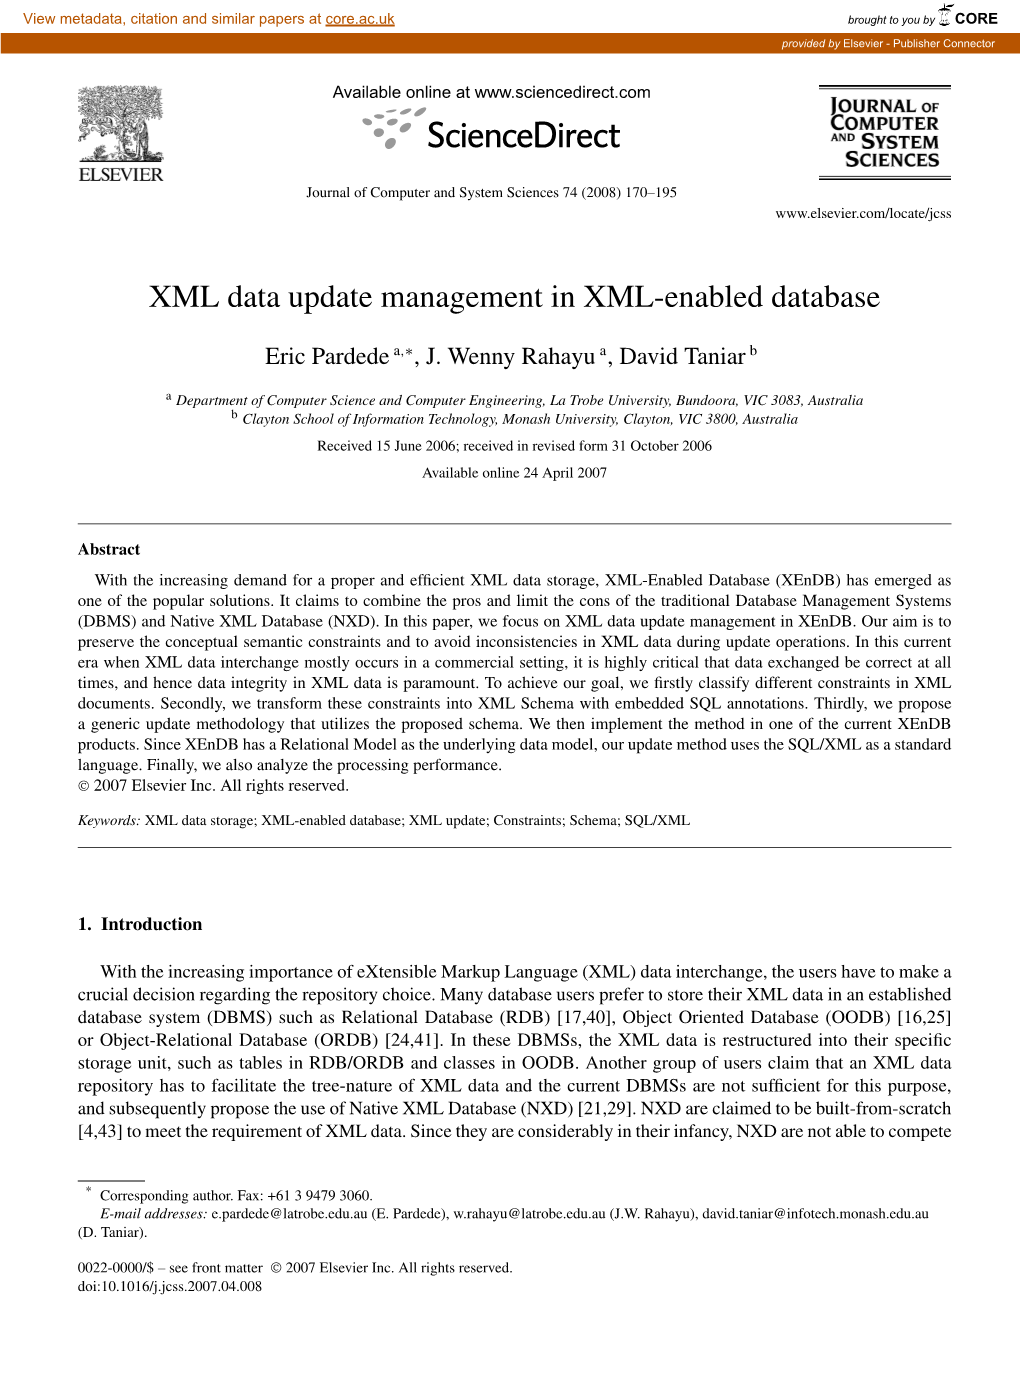 XML Data Update Management in XML-Enabled Database